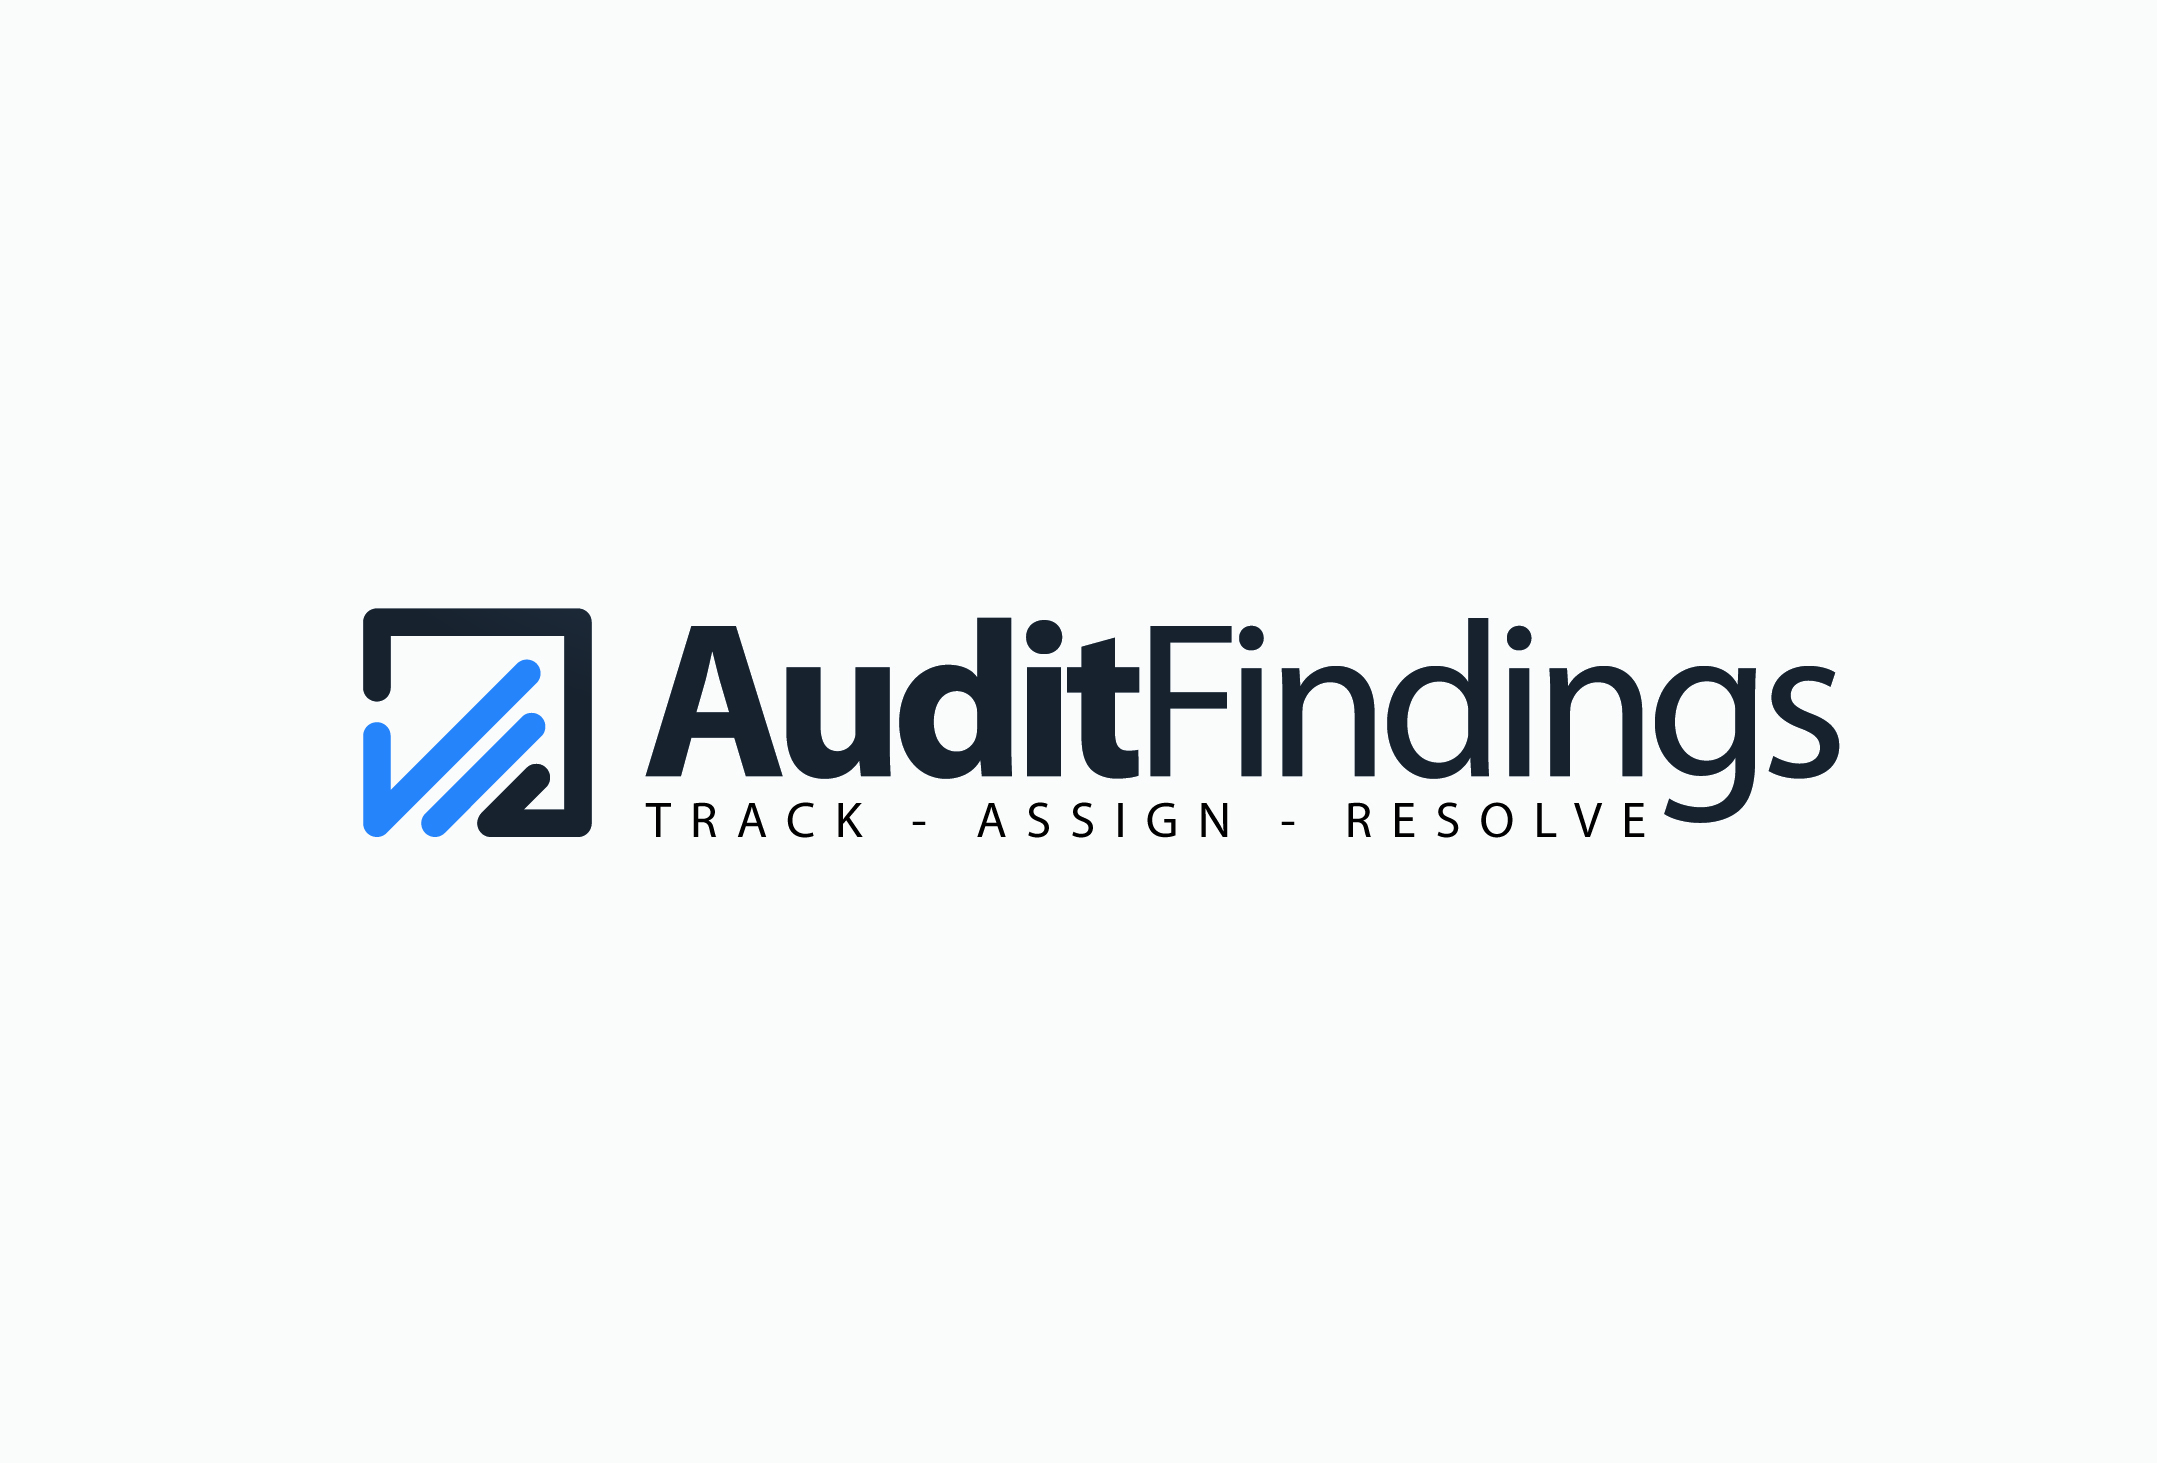 eLink Ventures invests in audit issue tracking software.